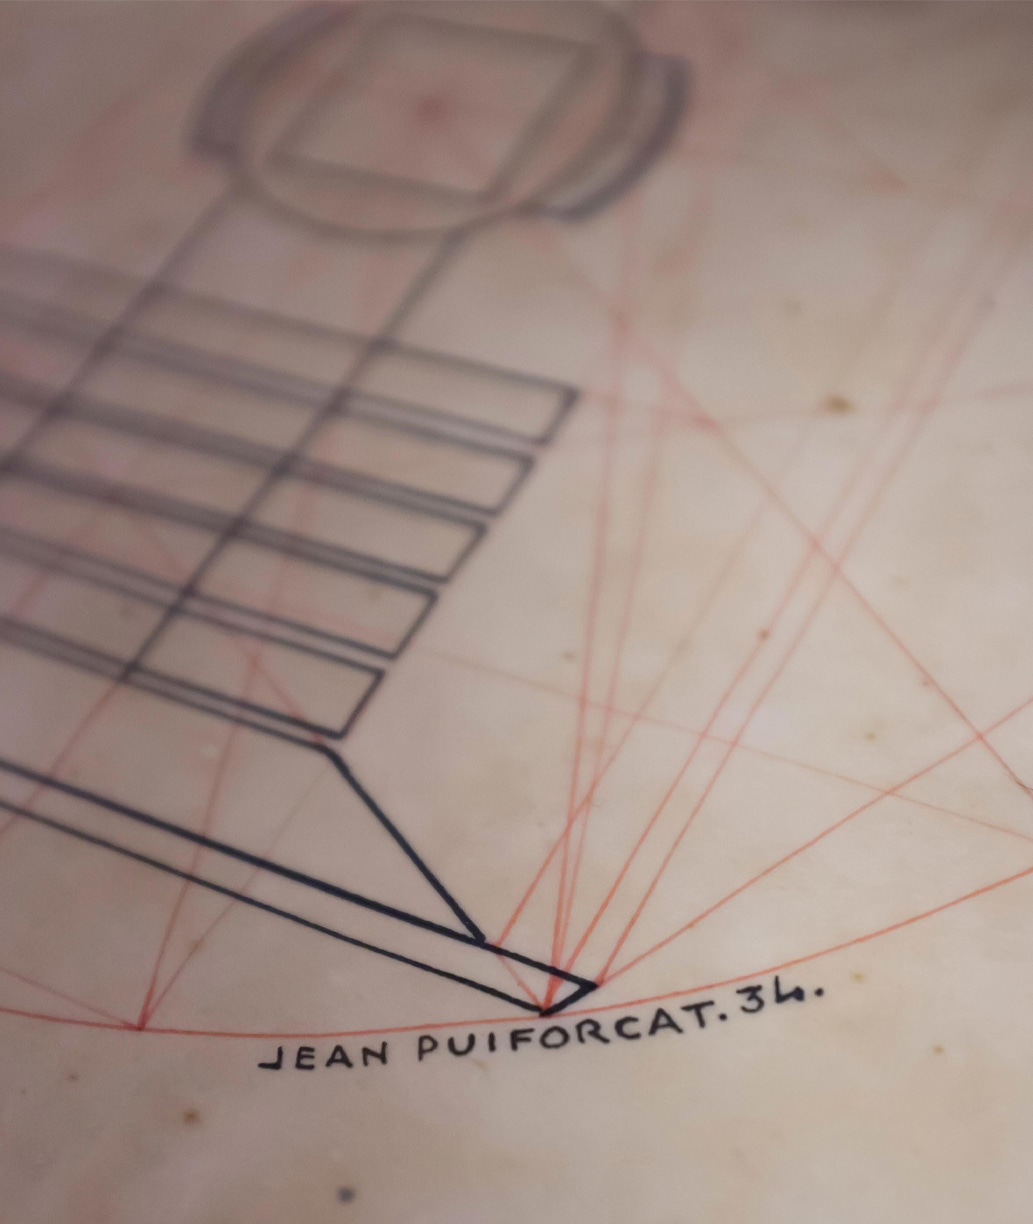 Jean Puiforcat sketch and writings